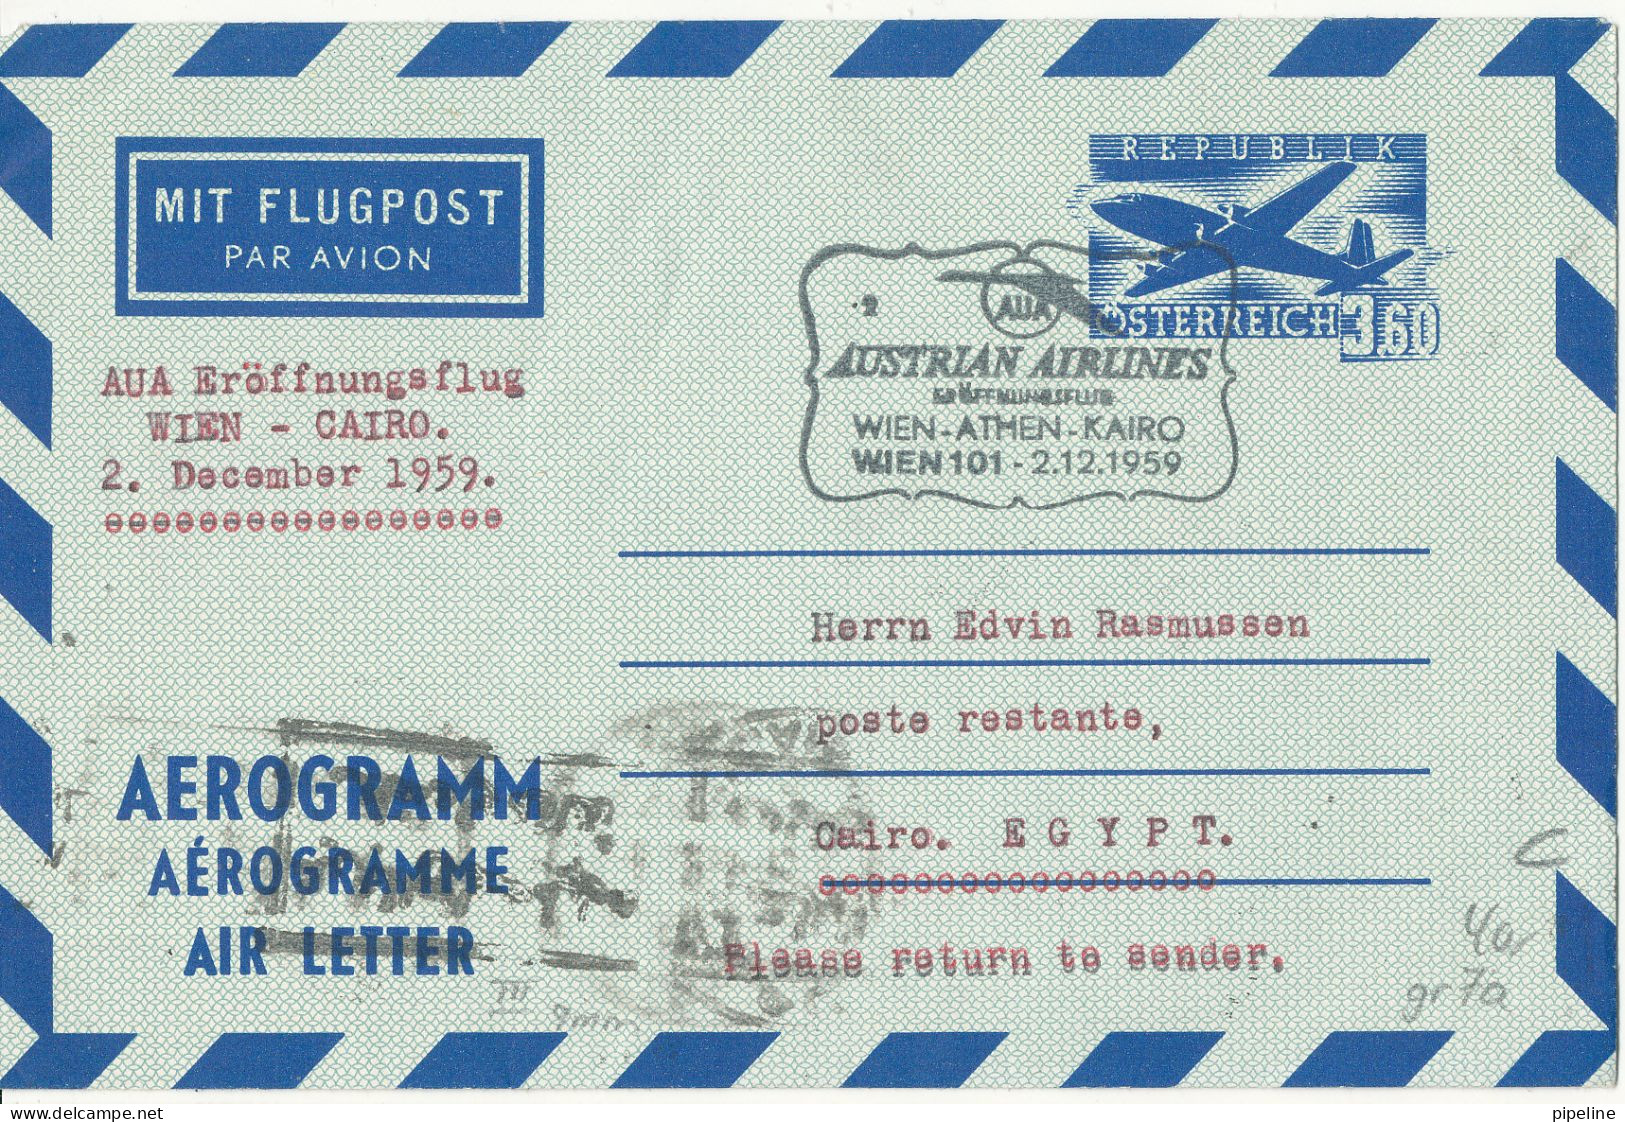 Austria Aerogramme First Flight Austrian Airlines Wien - Athen - Cairo -Wien 2-12-1959 - Premiers Vols